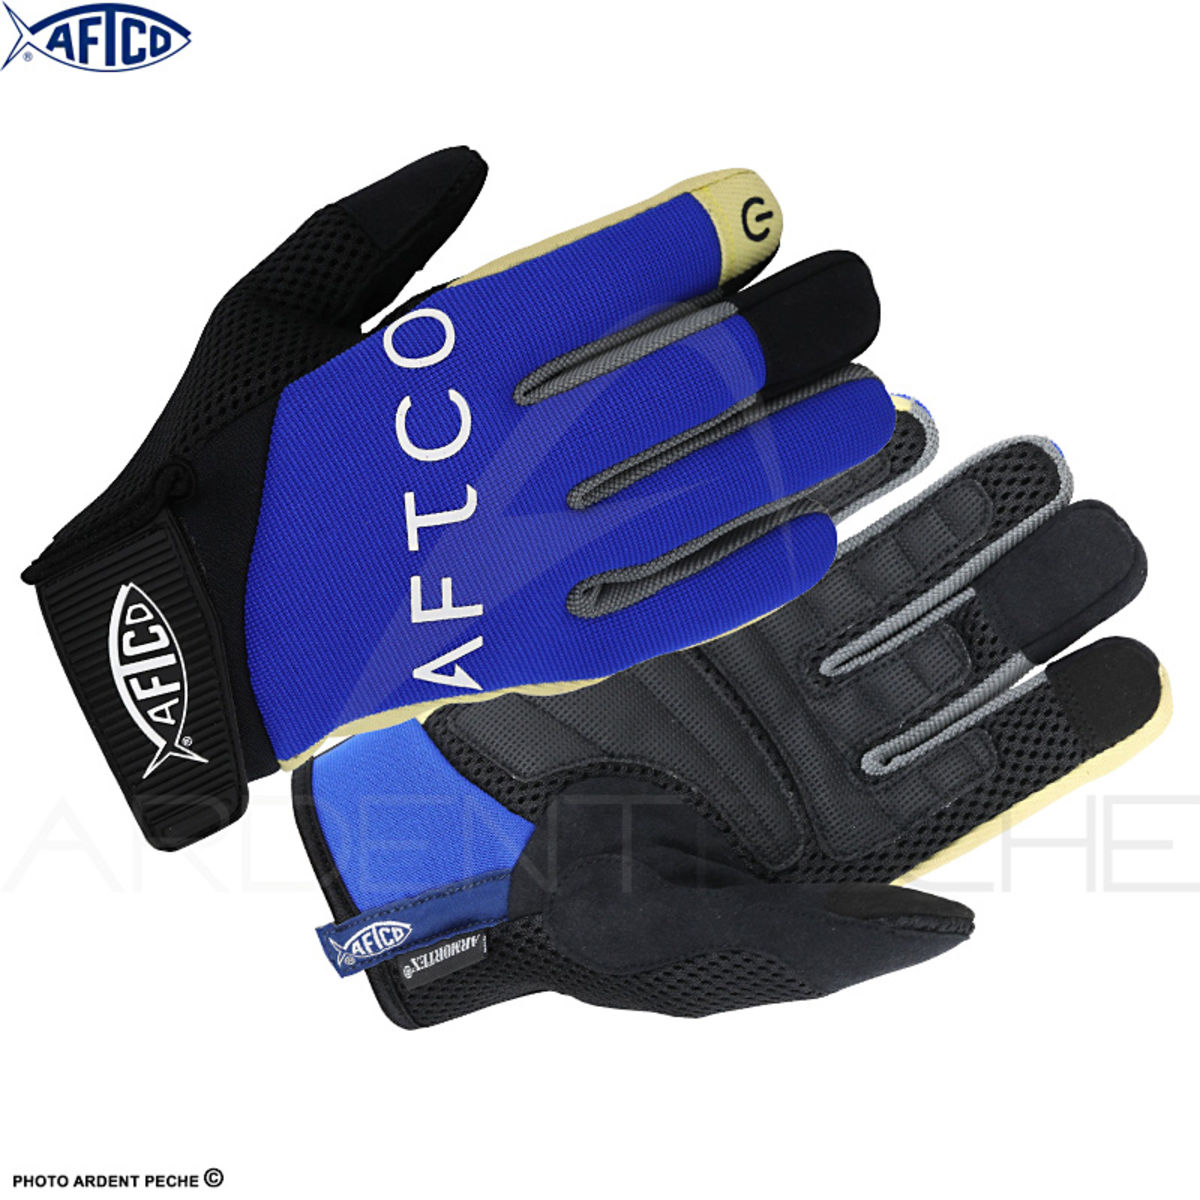 https://www.ardent-peche.com/Image/66690/1200x1200/gants-aftco-release-gloves.jpg